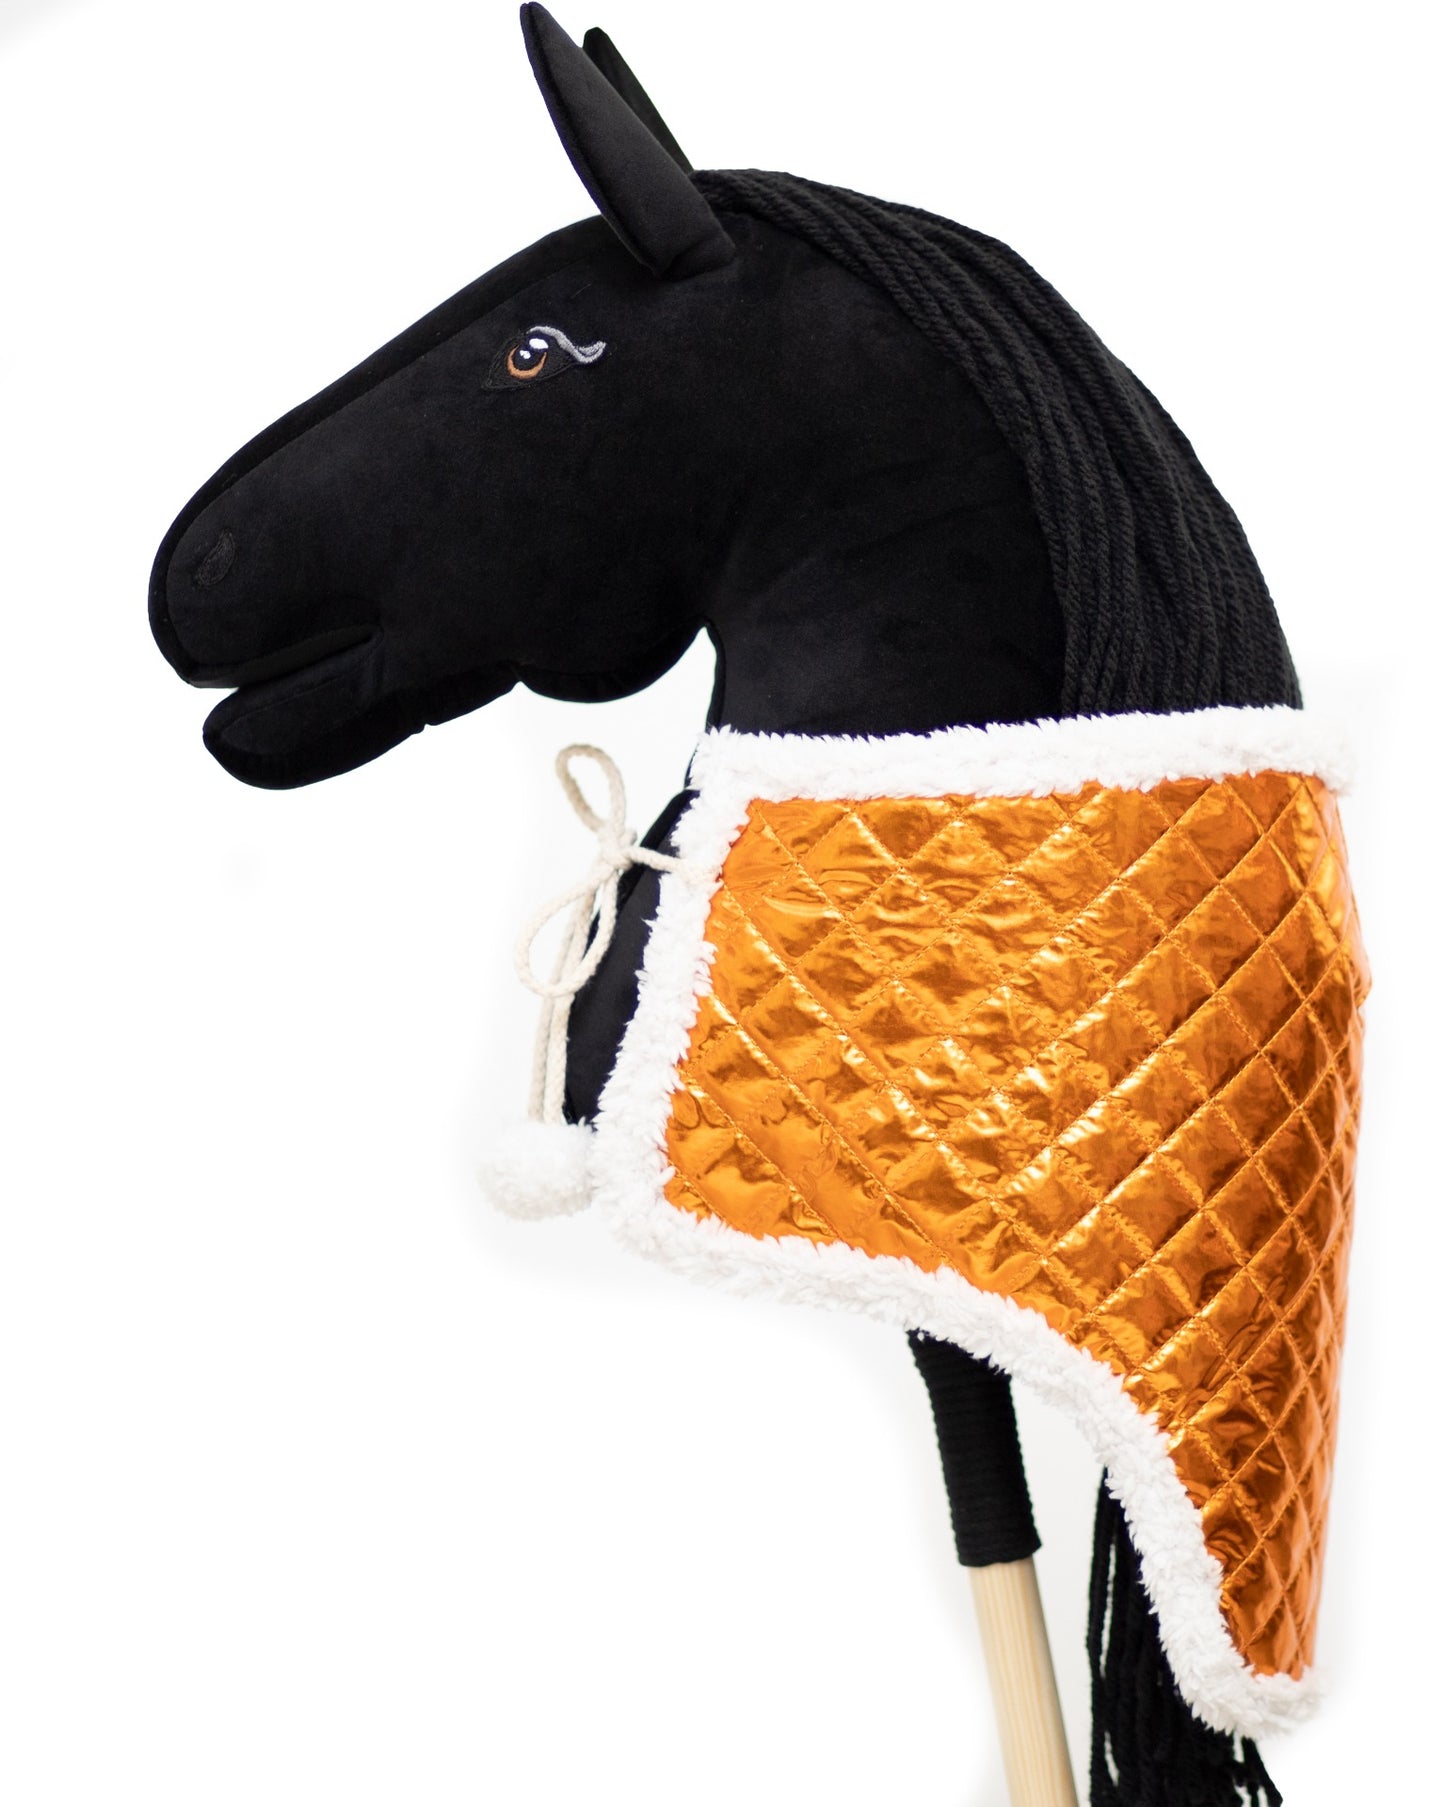 Winter blanket - Stitch with lamb fur - Orange - Adult horse